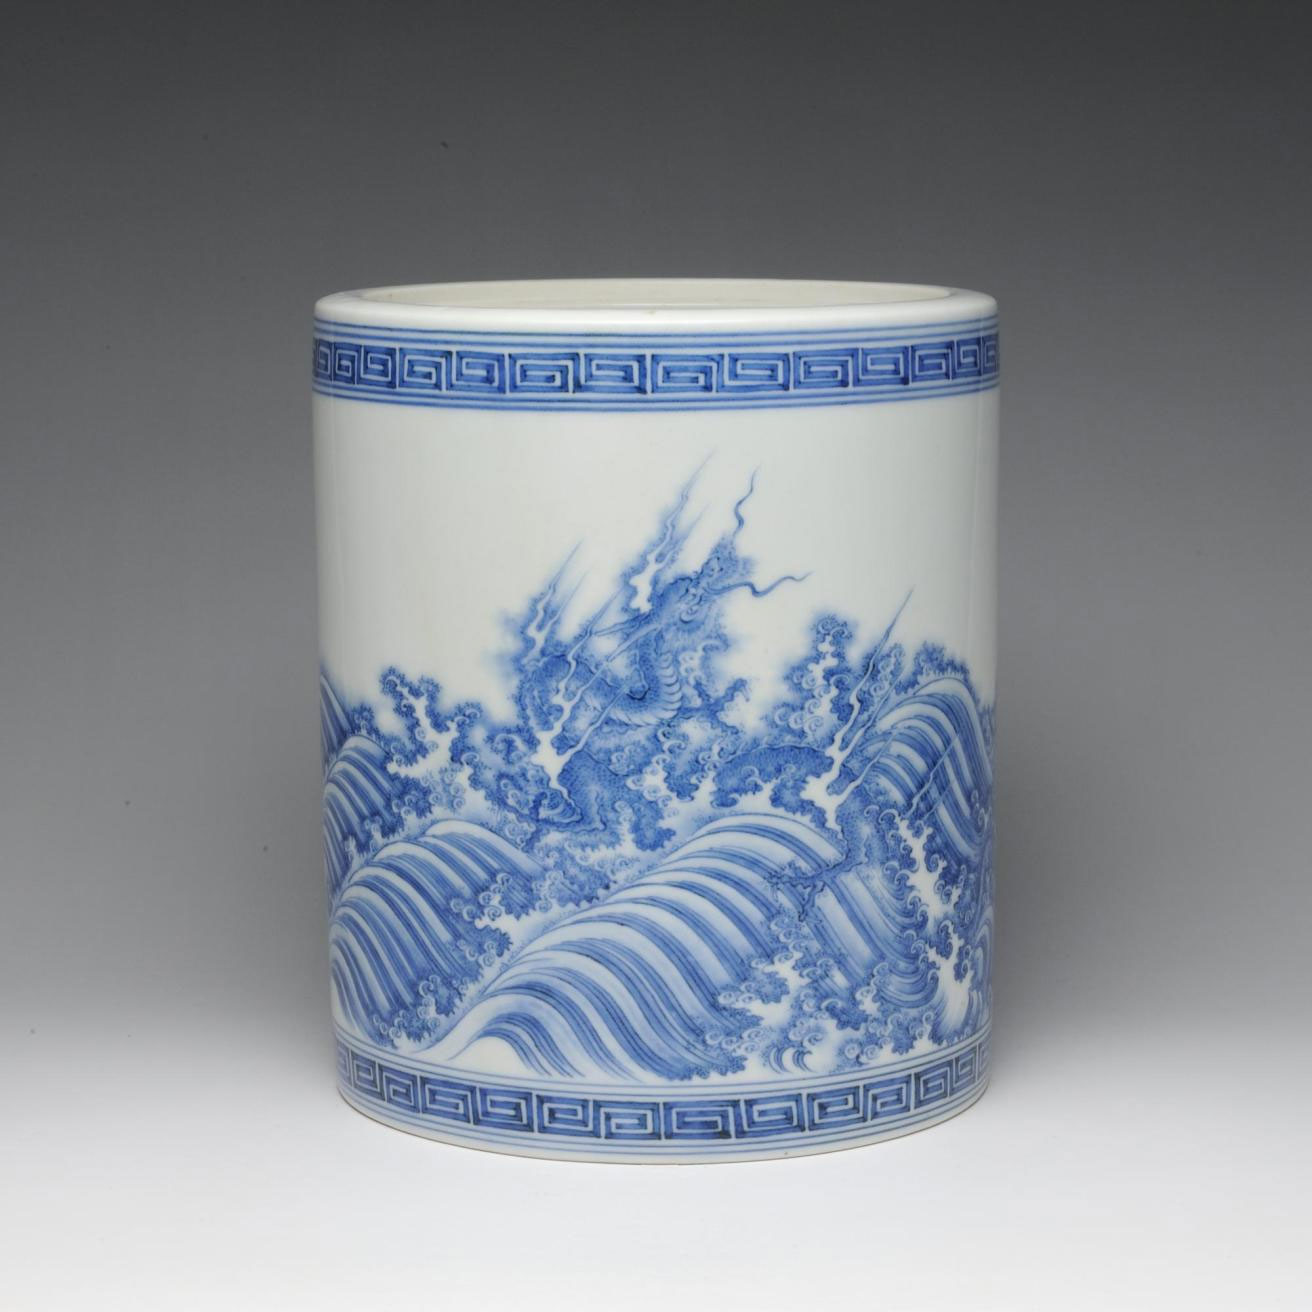 Straight-sided porcelain water jar (mizusashi) with design of blue dragons in surging waves: Japan, Hirado Mikawachi, c1700.